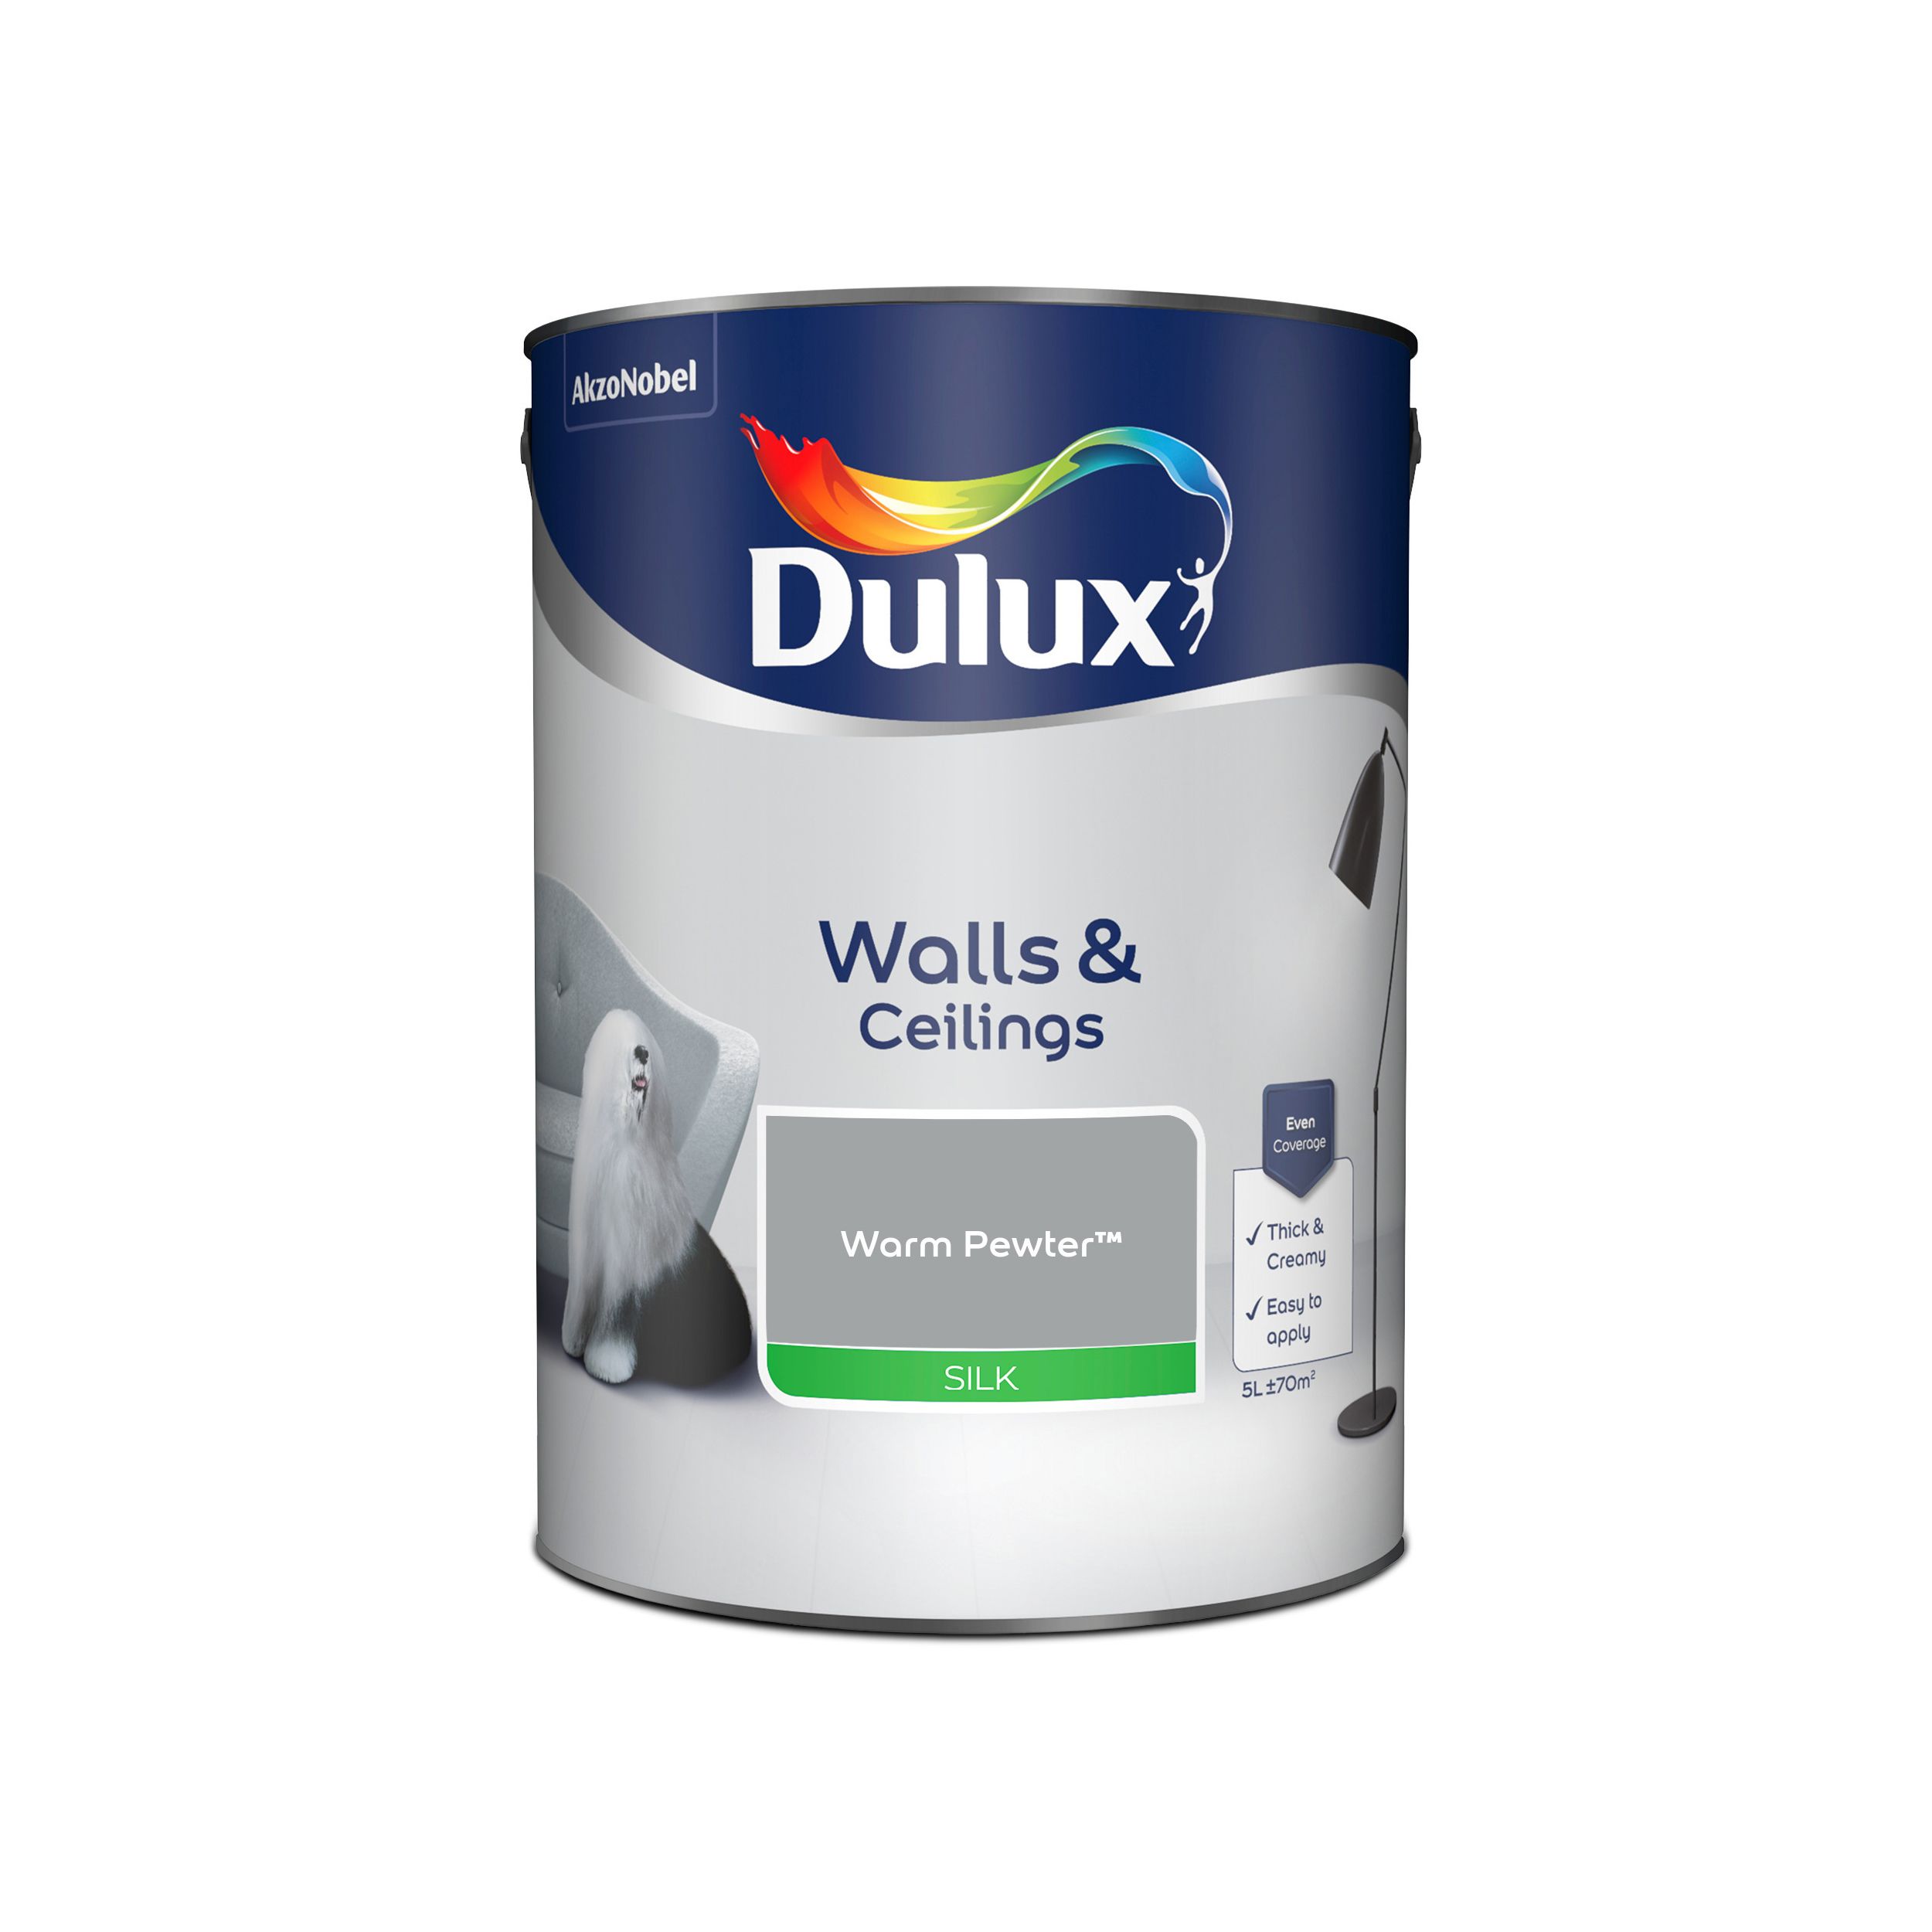 Dulux Walls & ceilings Warm pewter Silk Emulsion paint, 5L